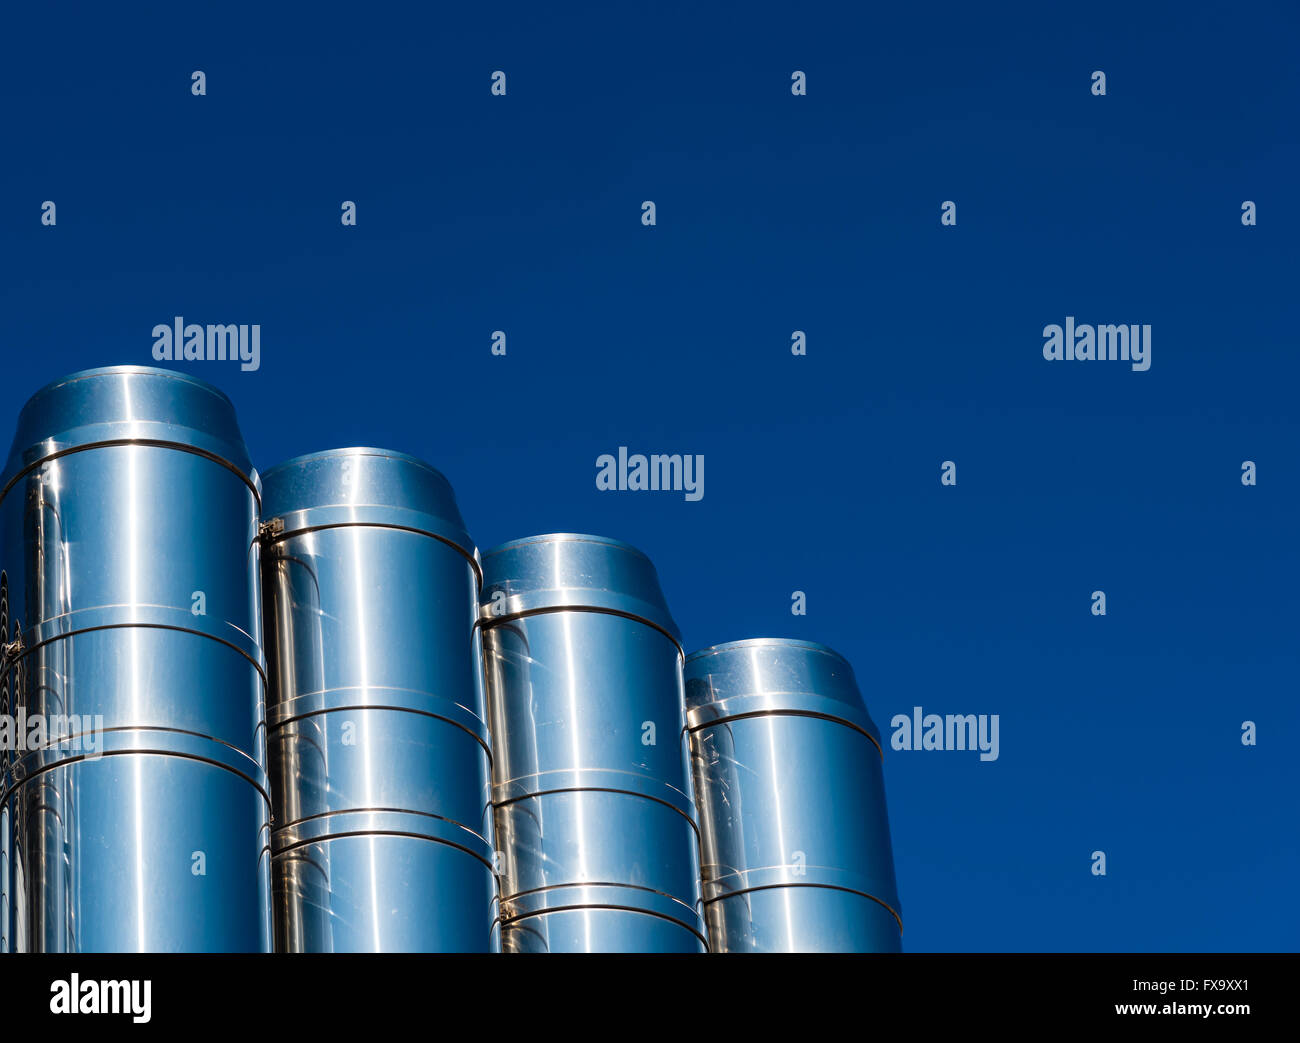 shiny chrome pipes against the blue sky Stock Photo